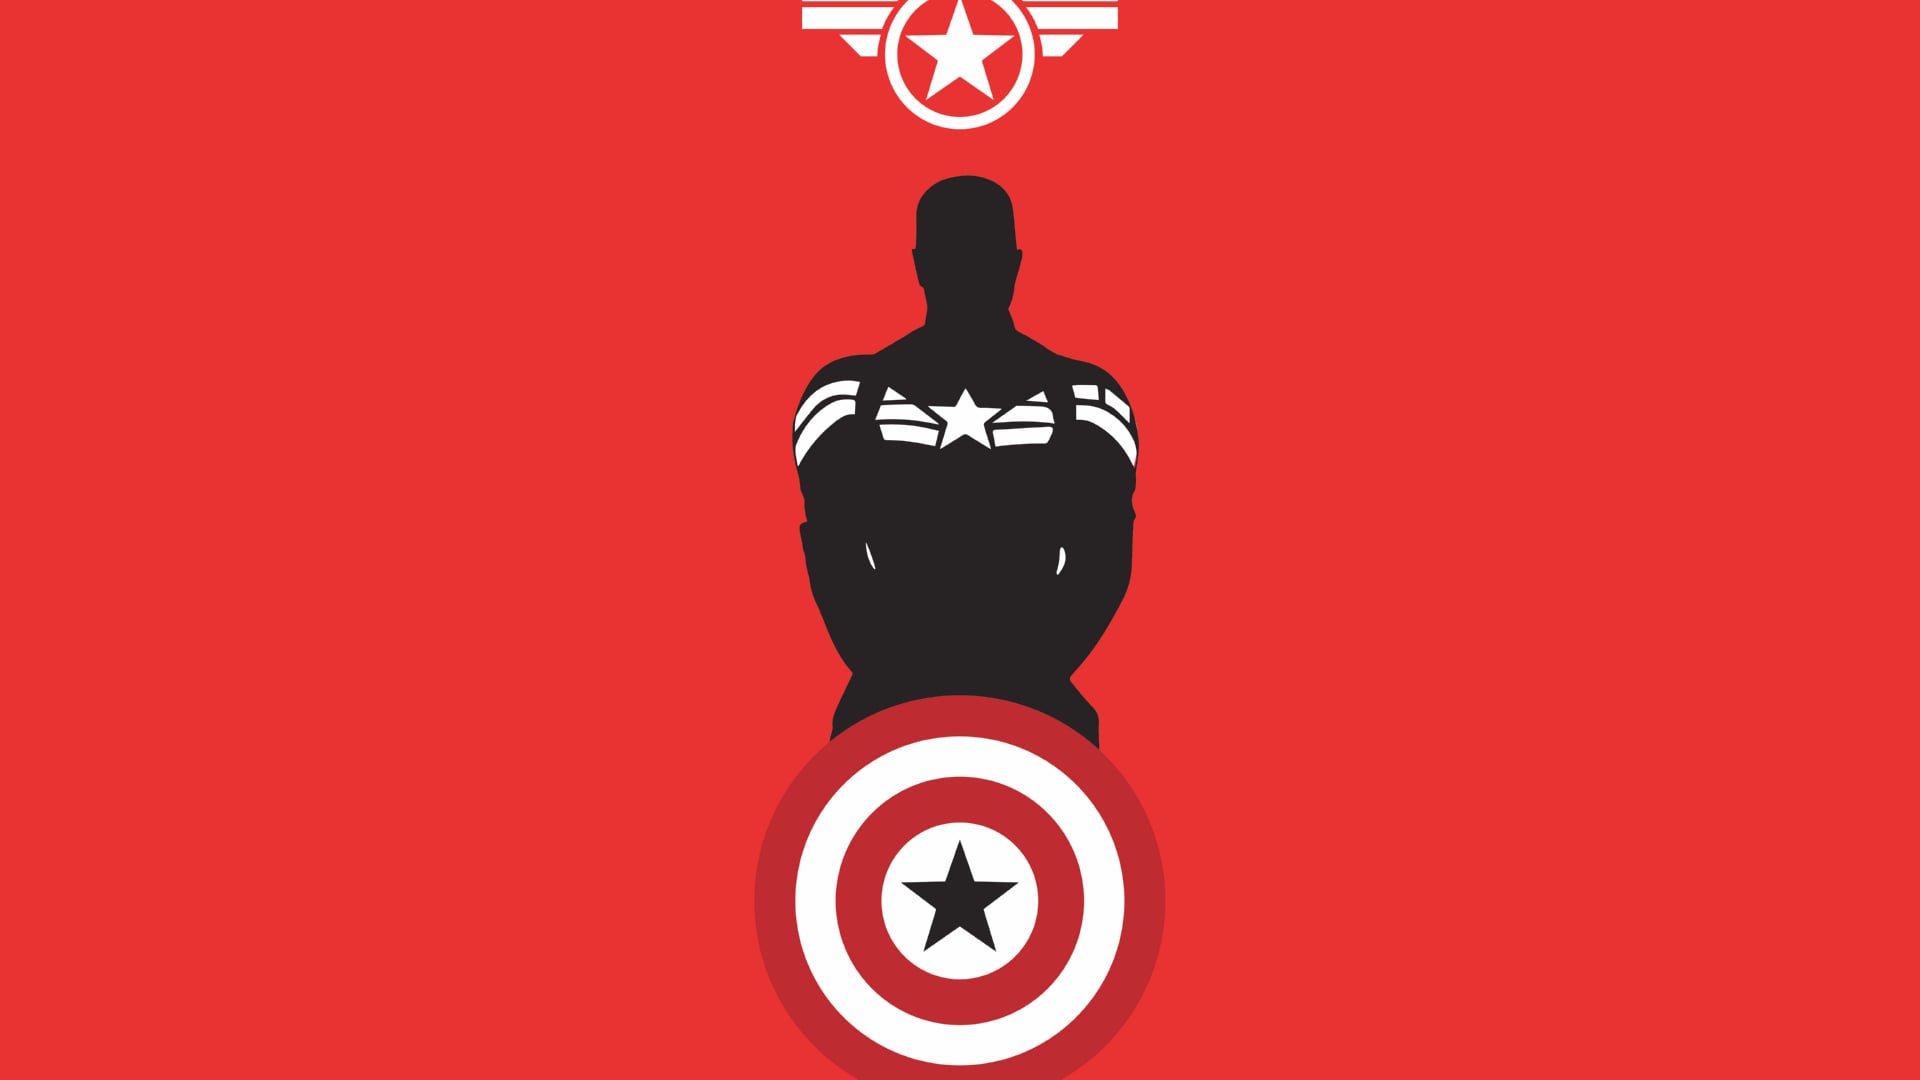 Digital Art Captain America wallpapers HD quality